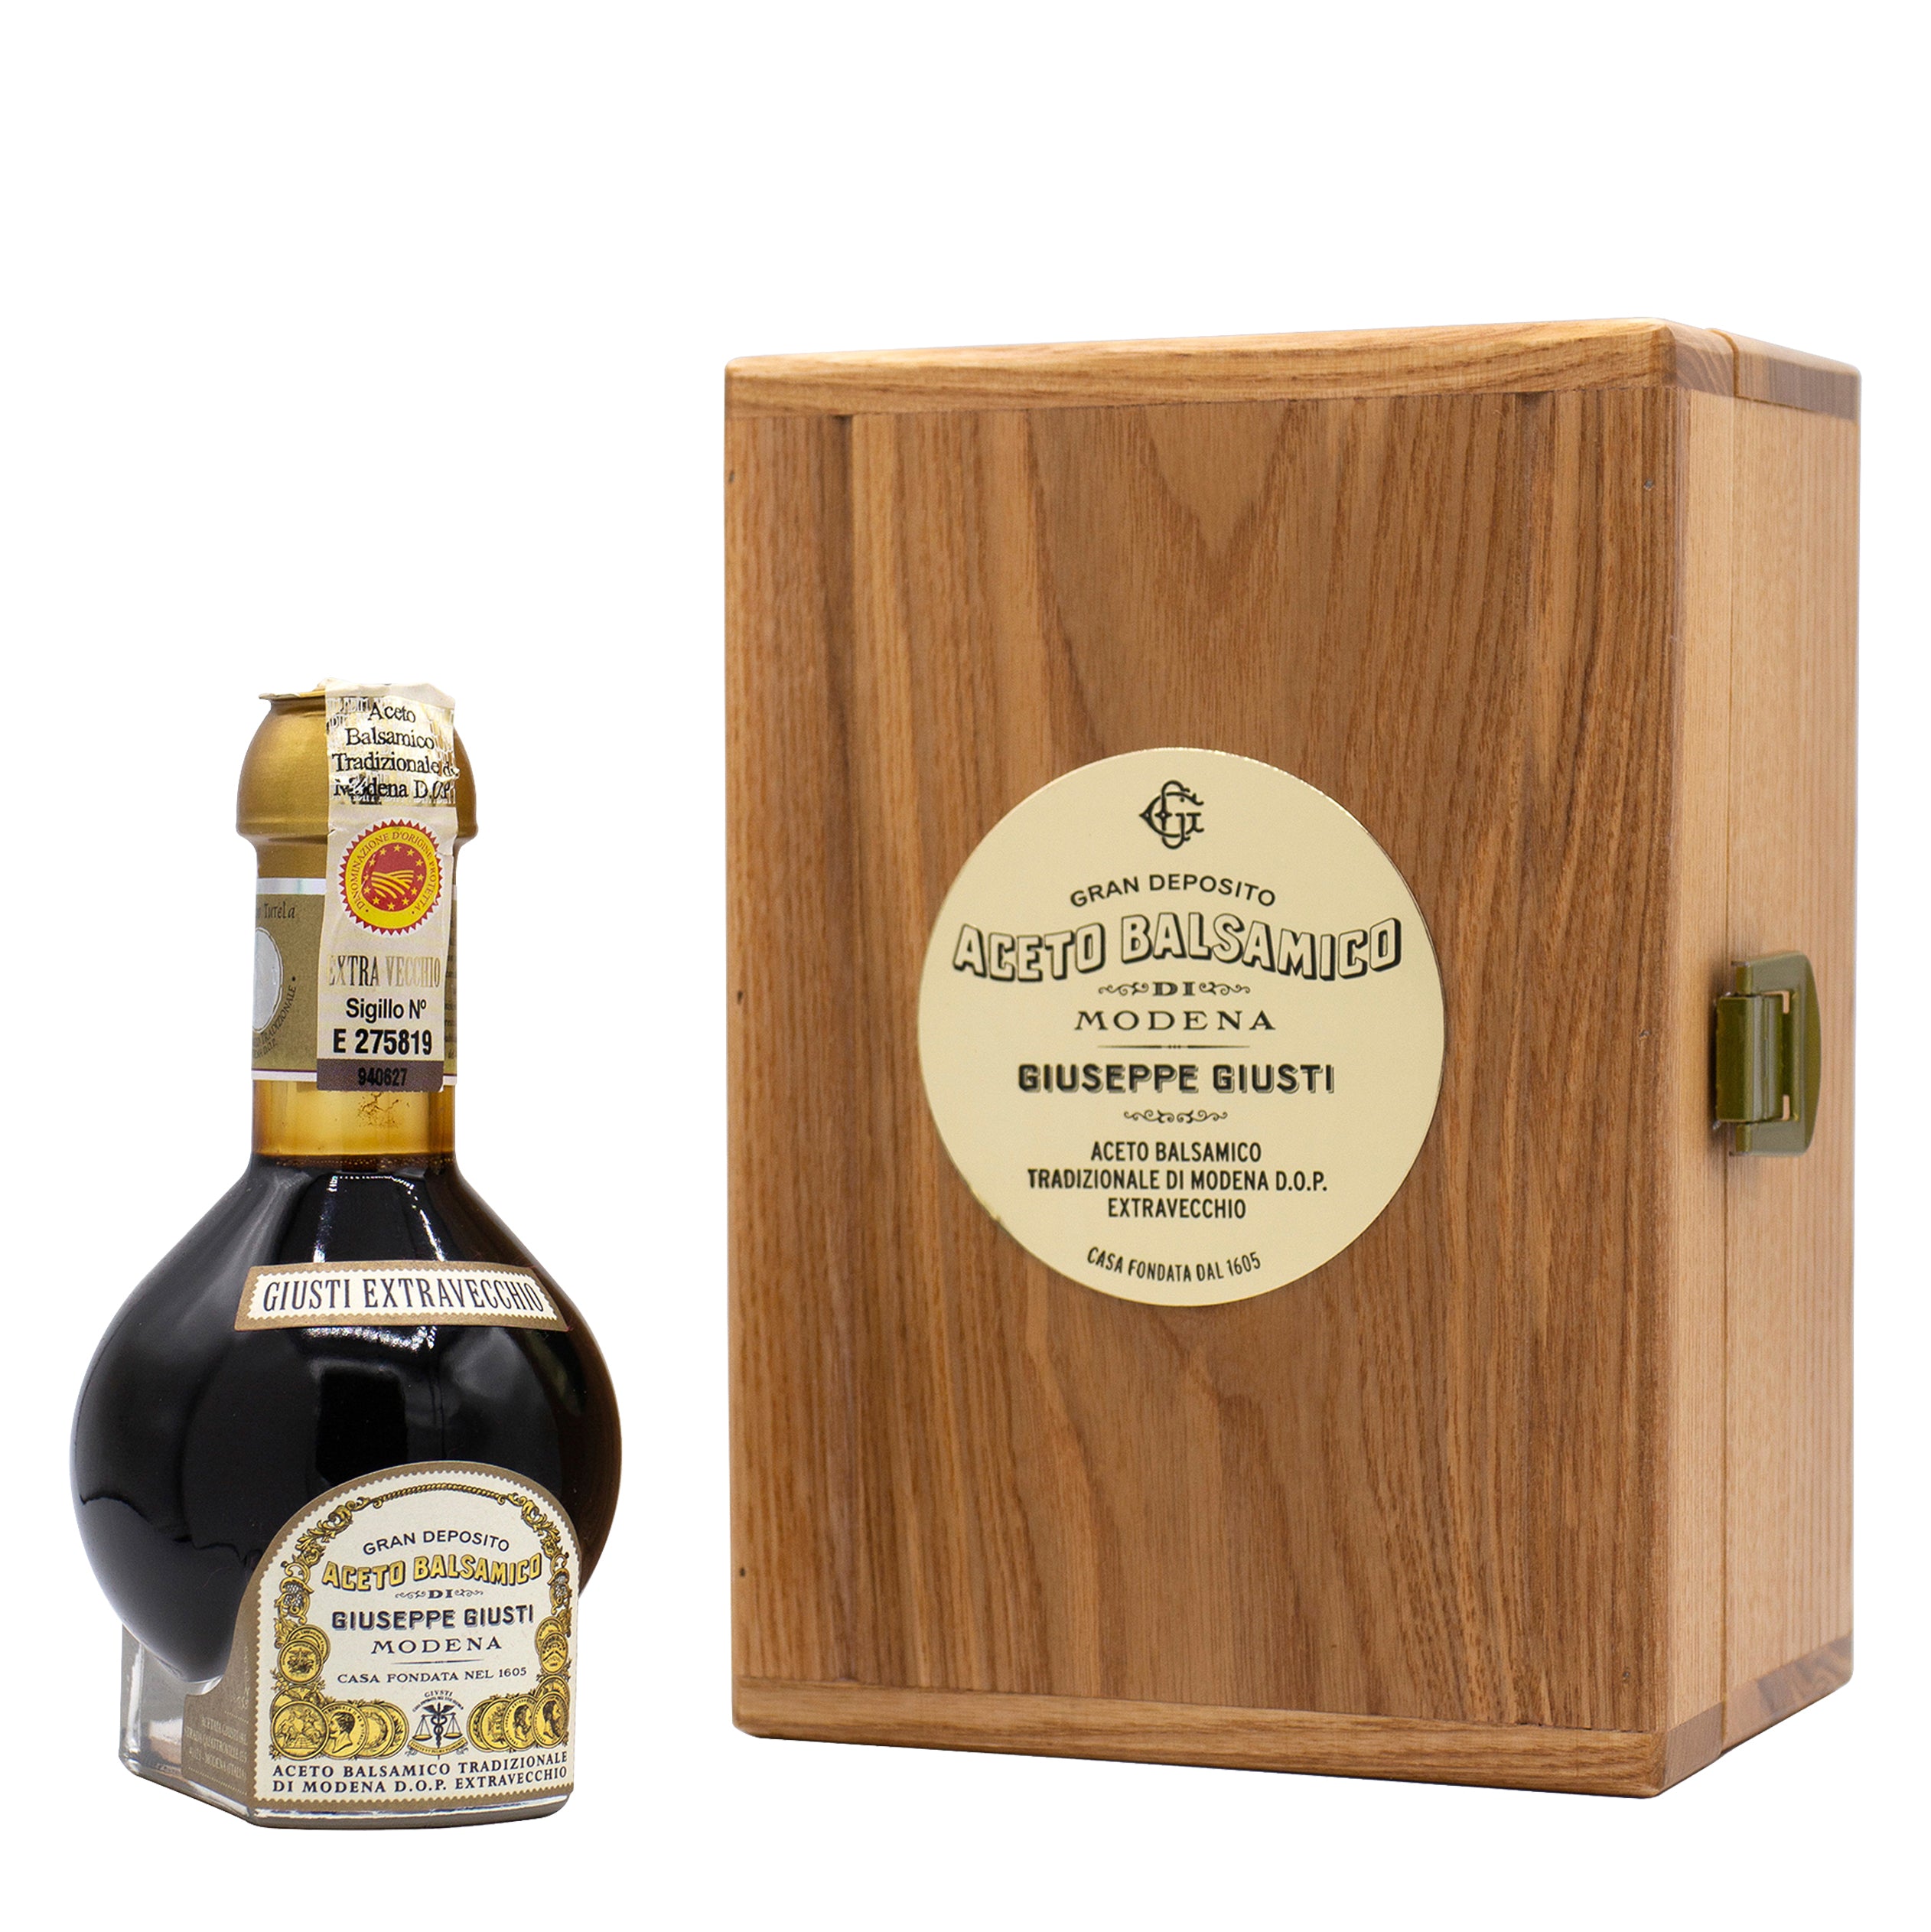 Giusti DOP Traditional Balsamic Vinegar of Modena Aged 25 Years